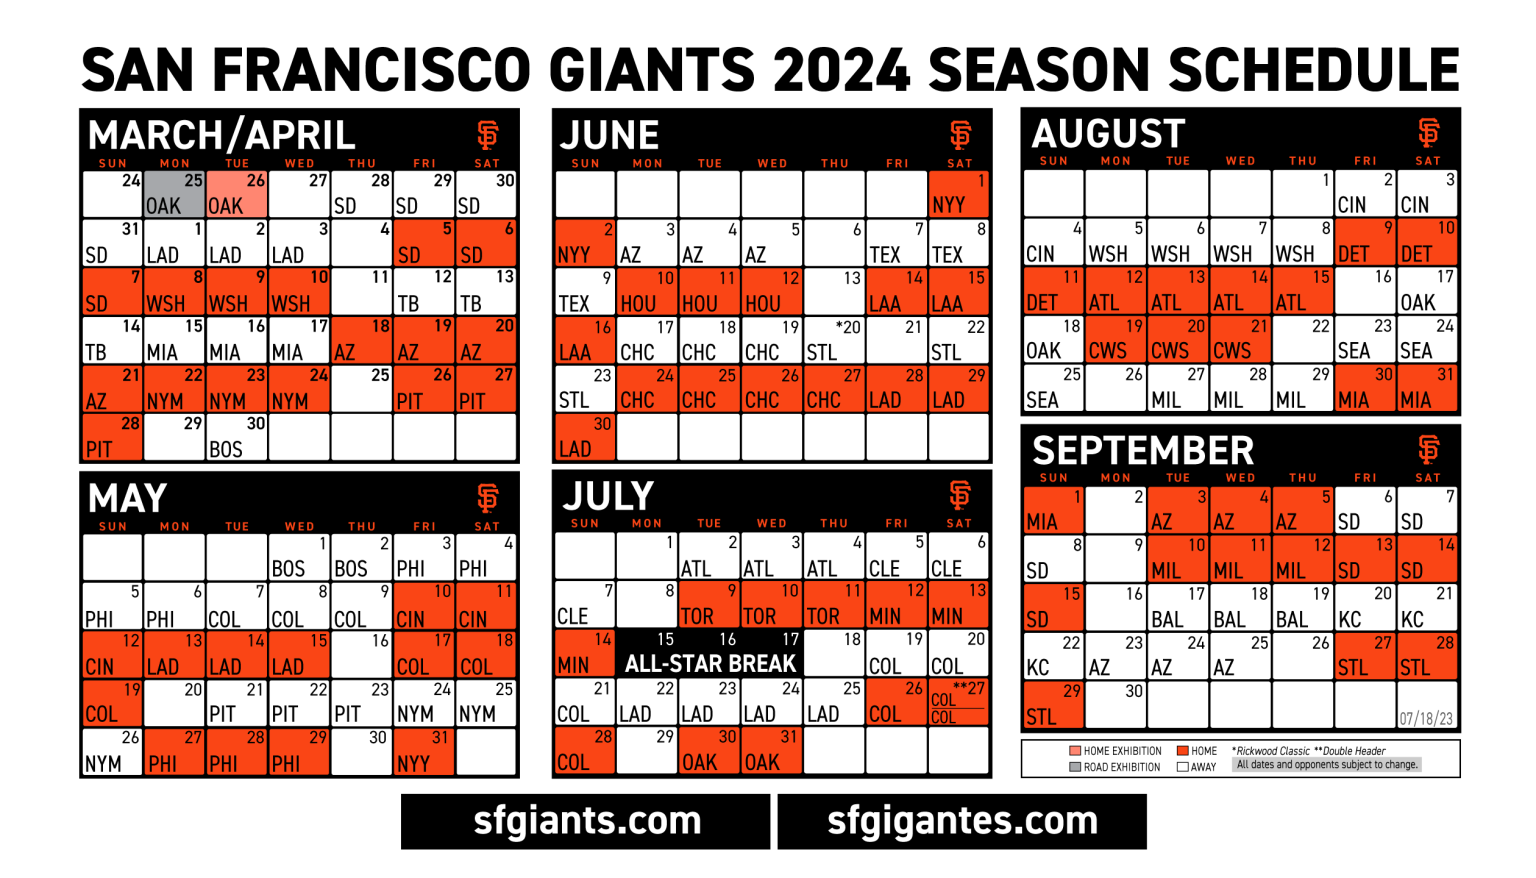 SF Giants release 2022 schedule, open season vs. Padres